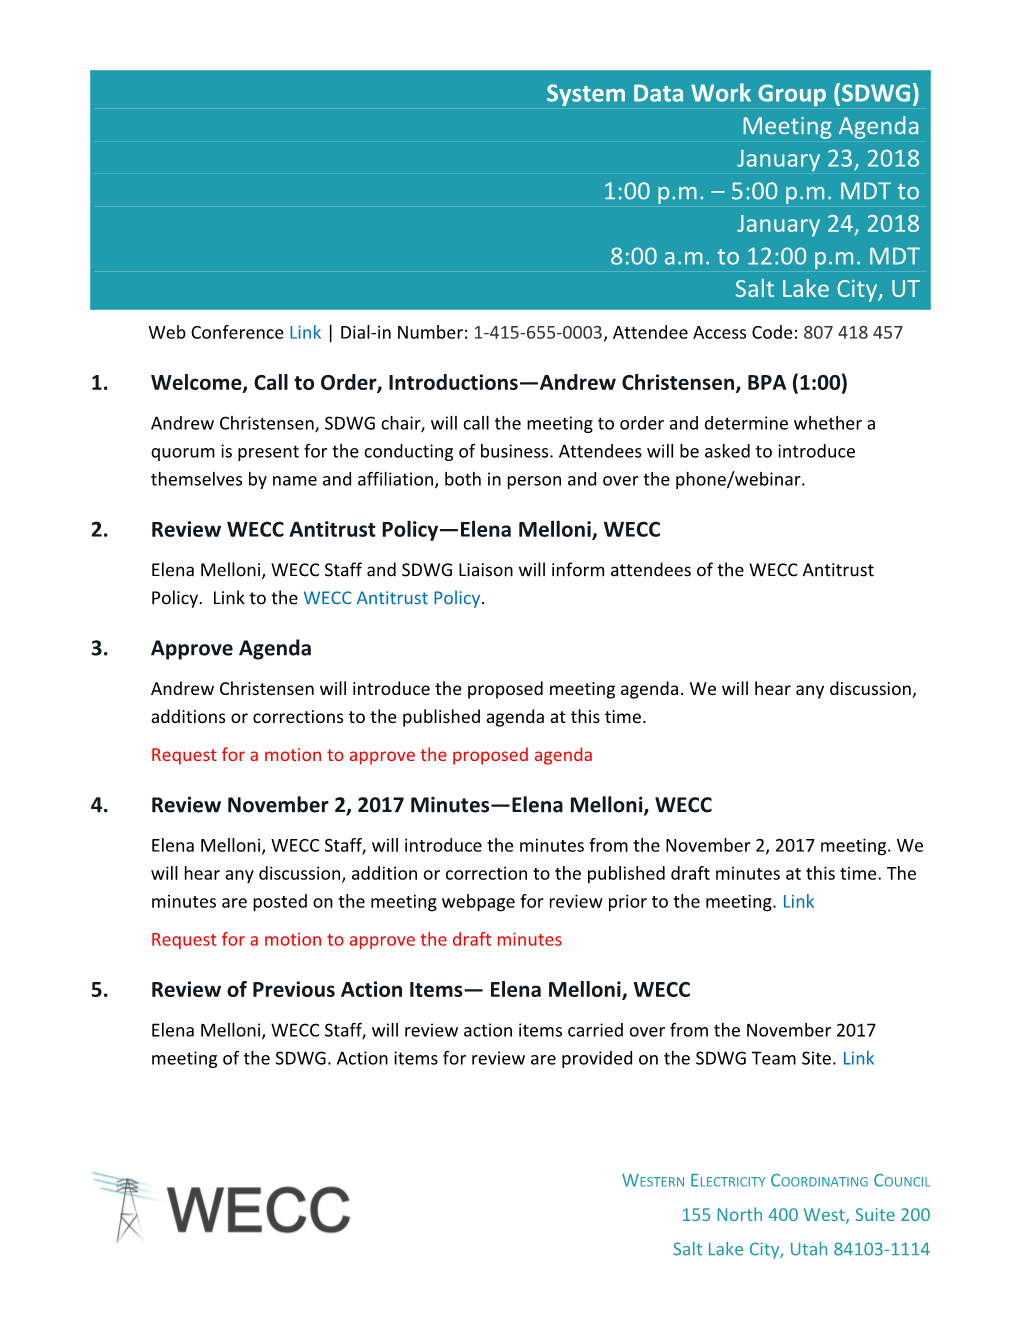 SDWG Meeting Agenda January 23-24, 20181